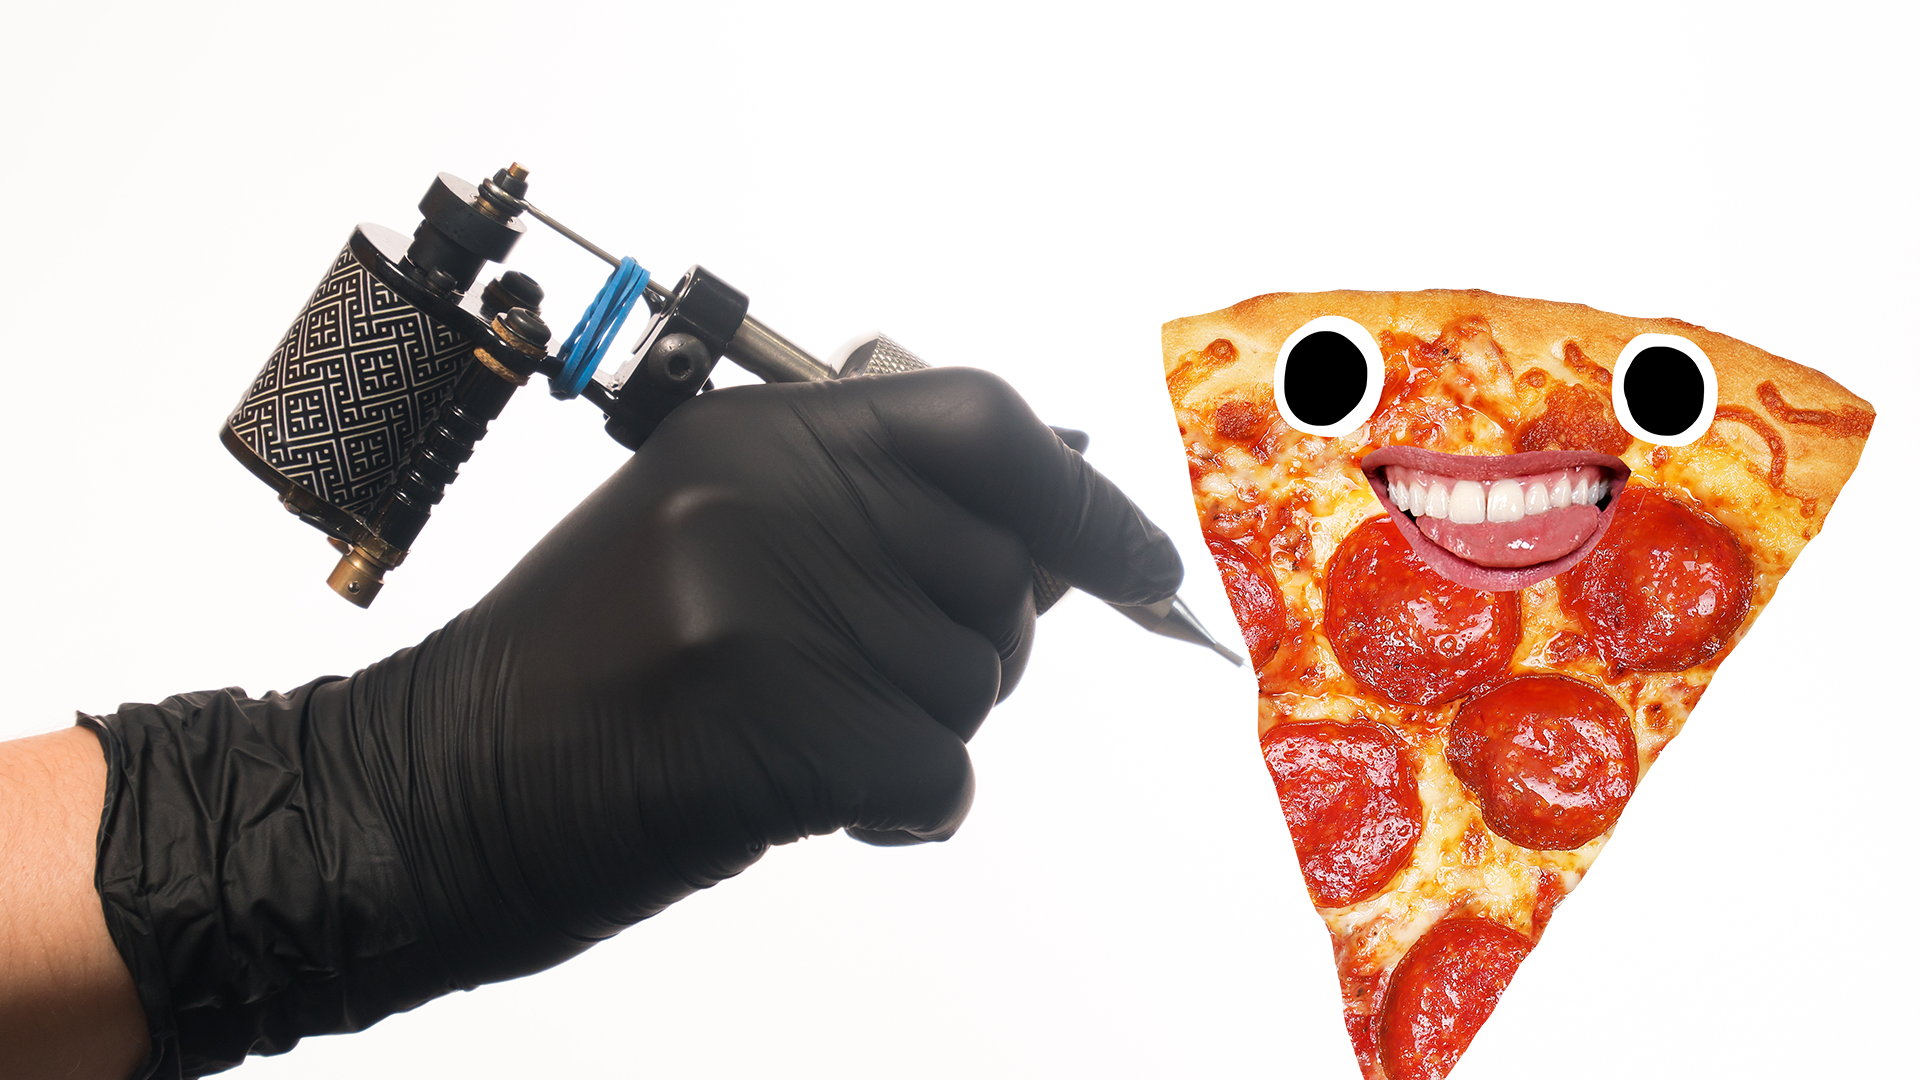 Tattoo gun and screaming pizza